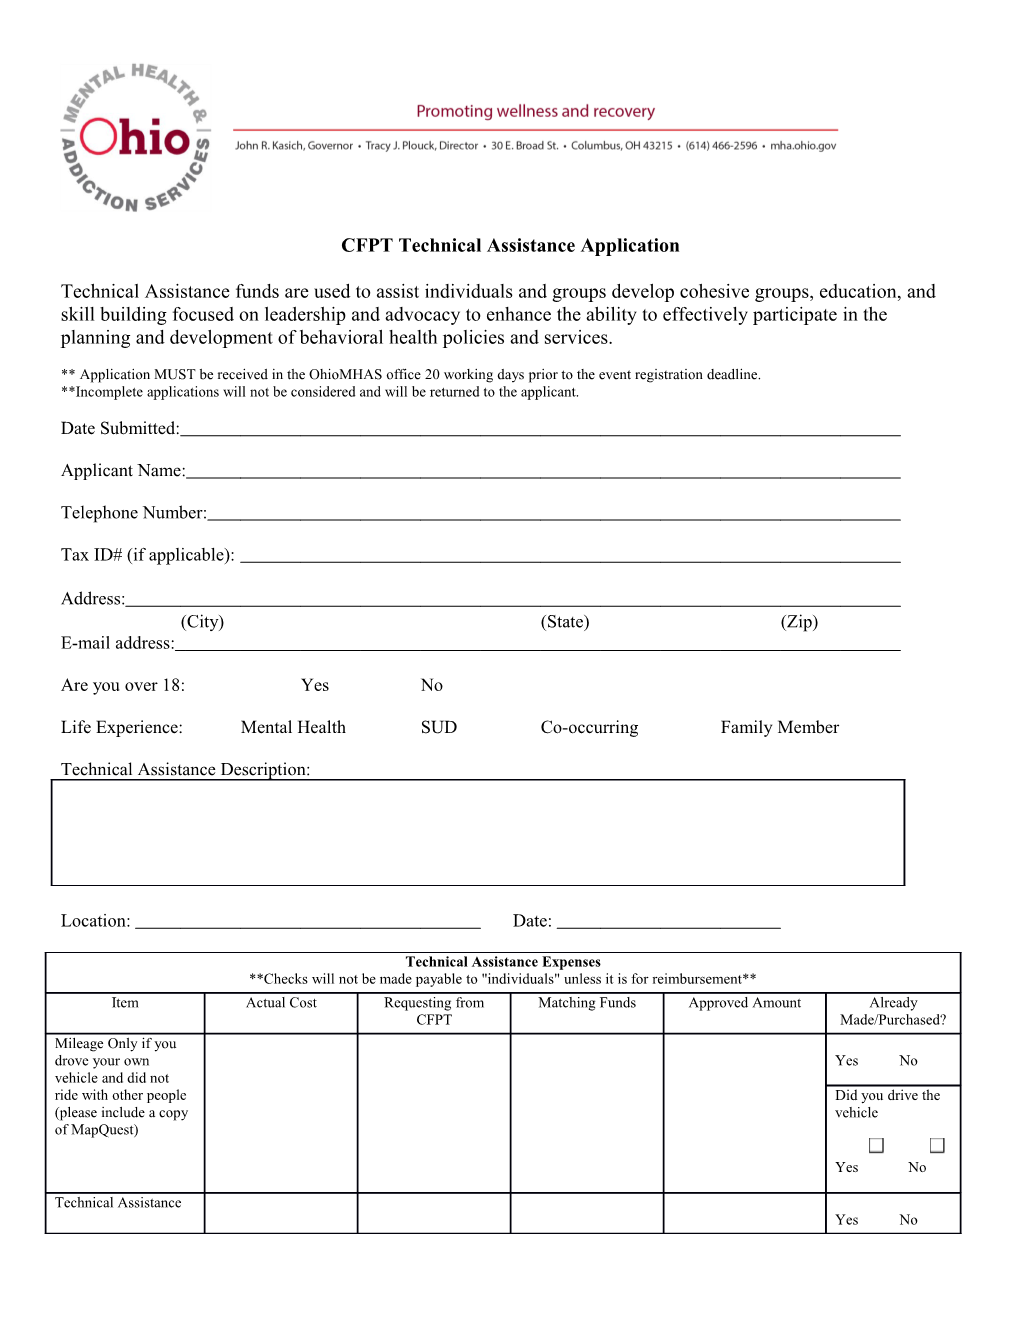 CFPT Technical Assistance Application